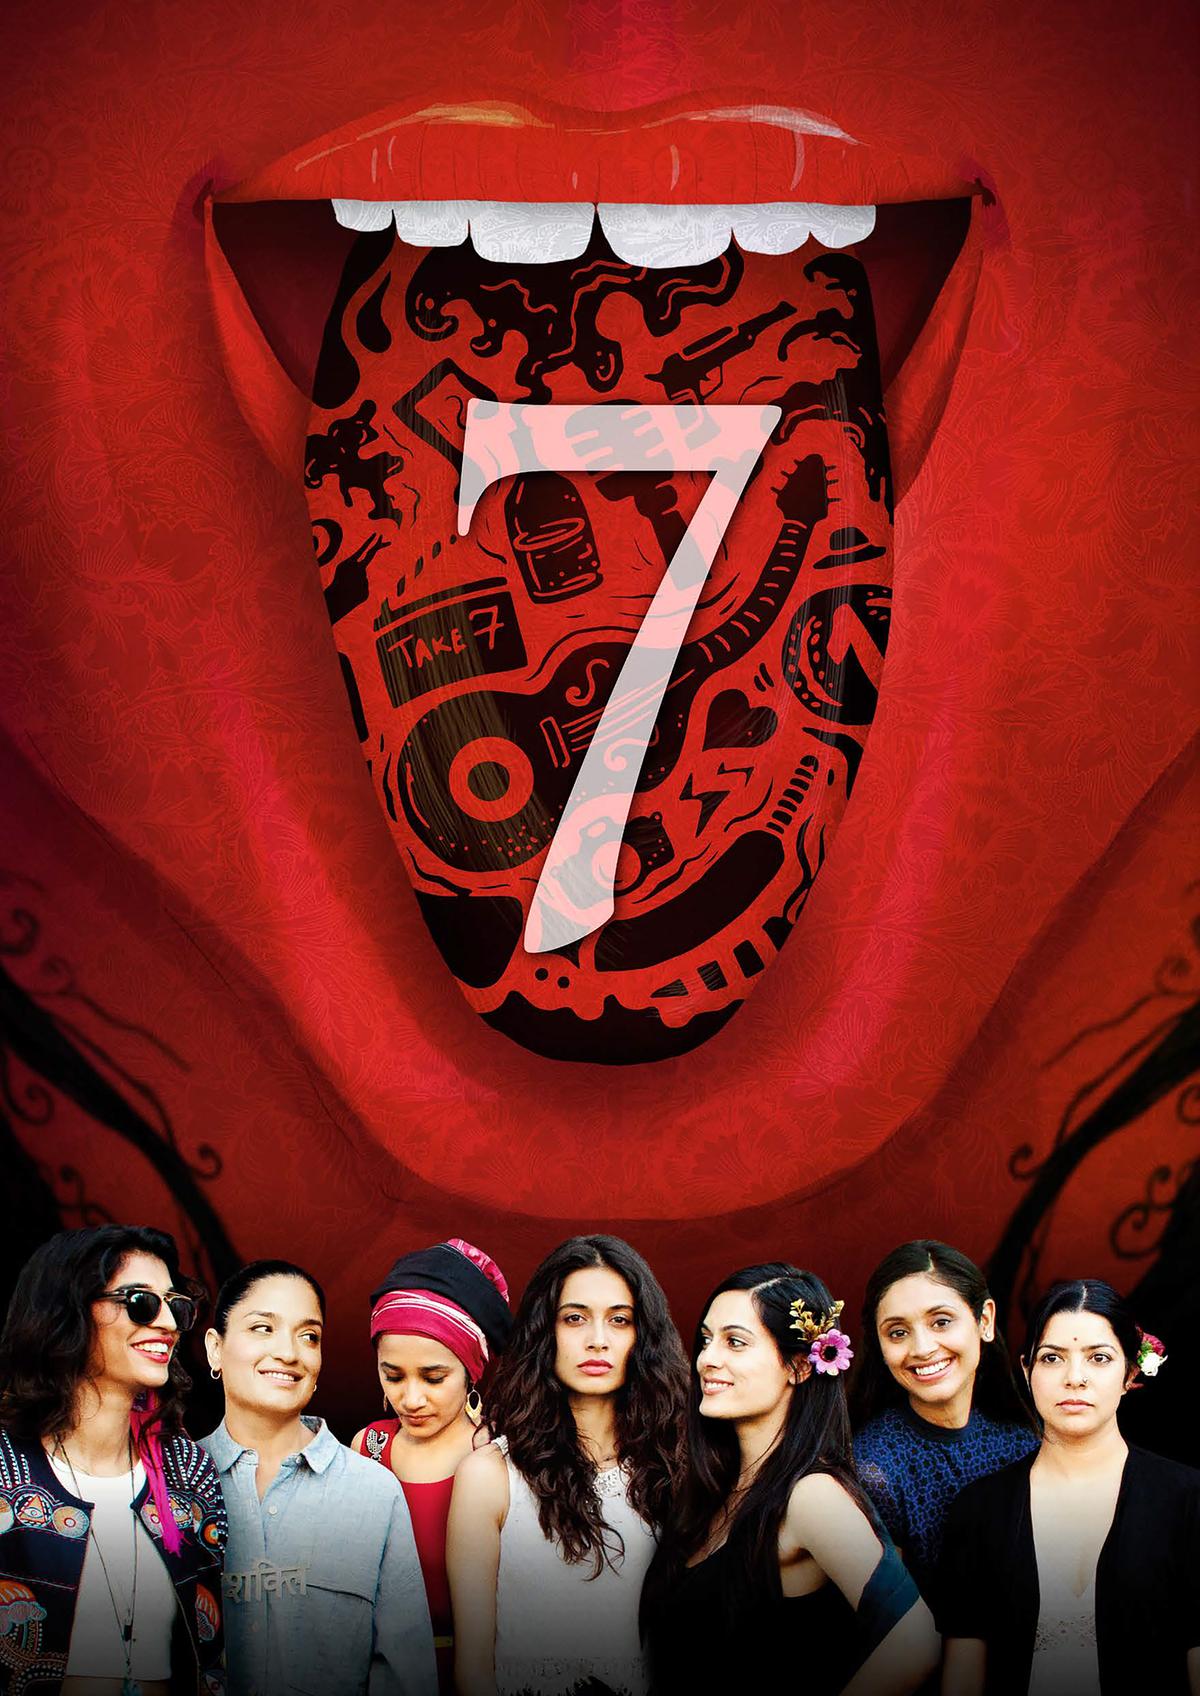 Im Bild: Anushka Manchanda (Madhureeta, 'Mad'), Sandhya Mridul (Suranjana, 'Su'), Tannishtha Chatterjee (Nargis), Sarah-Jane Dias (Freida), Amrit Maghera (Joanna, 'Jo'),Pavleen Gujral (Pamela, 'Pam'), Rajshri Deshpande (Laxmi).